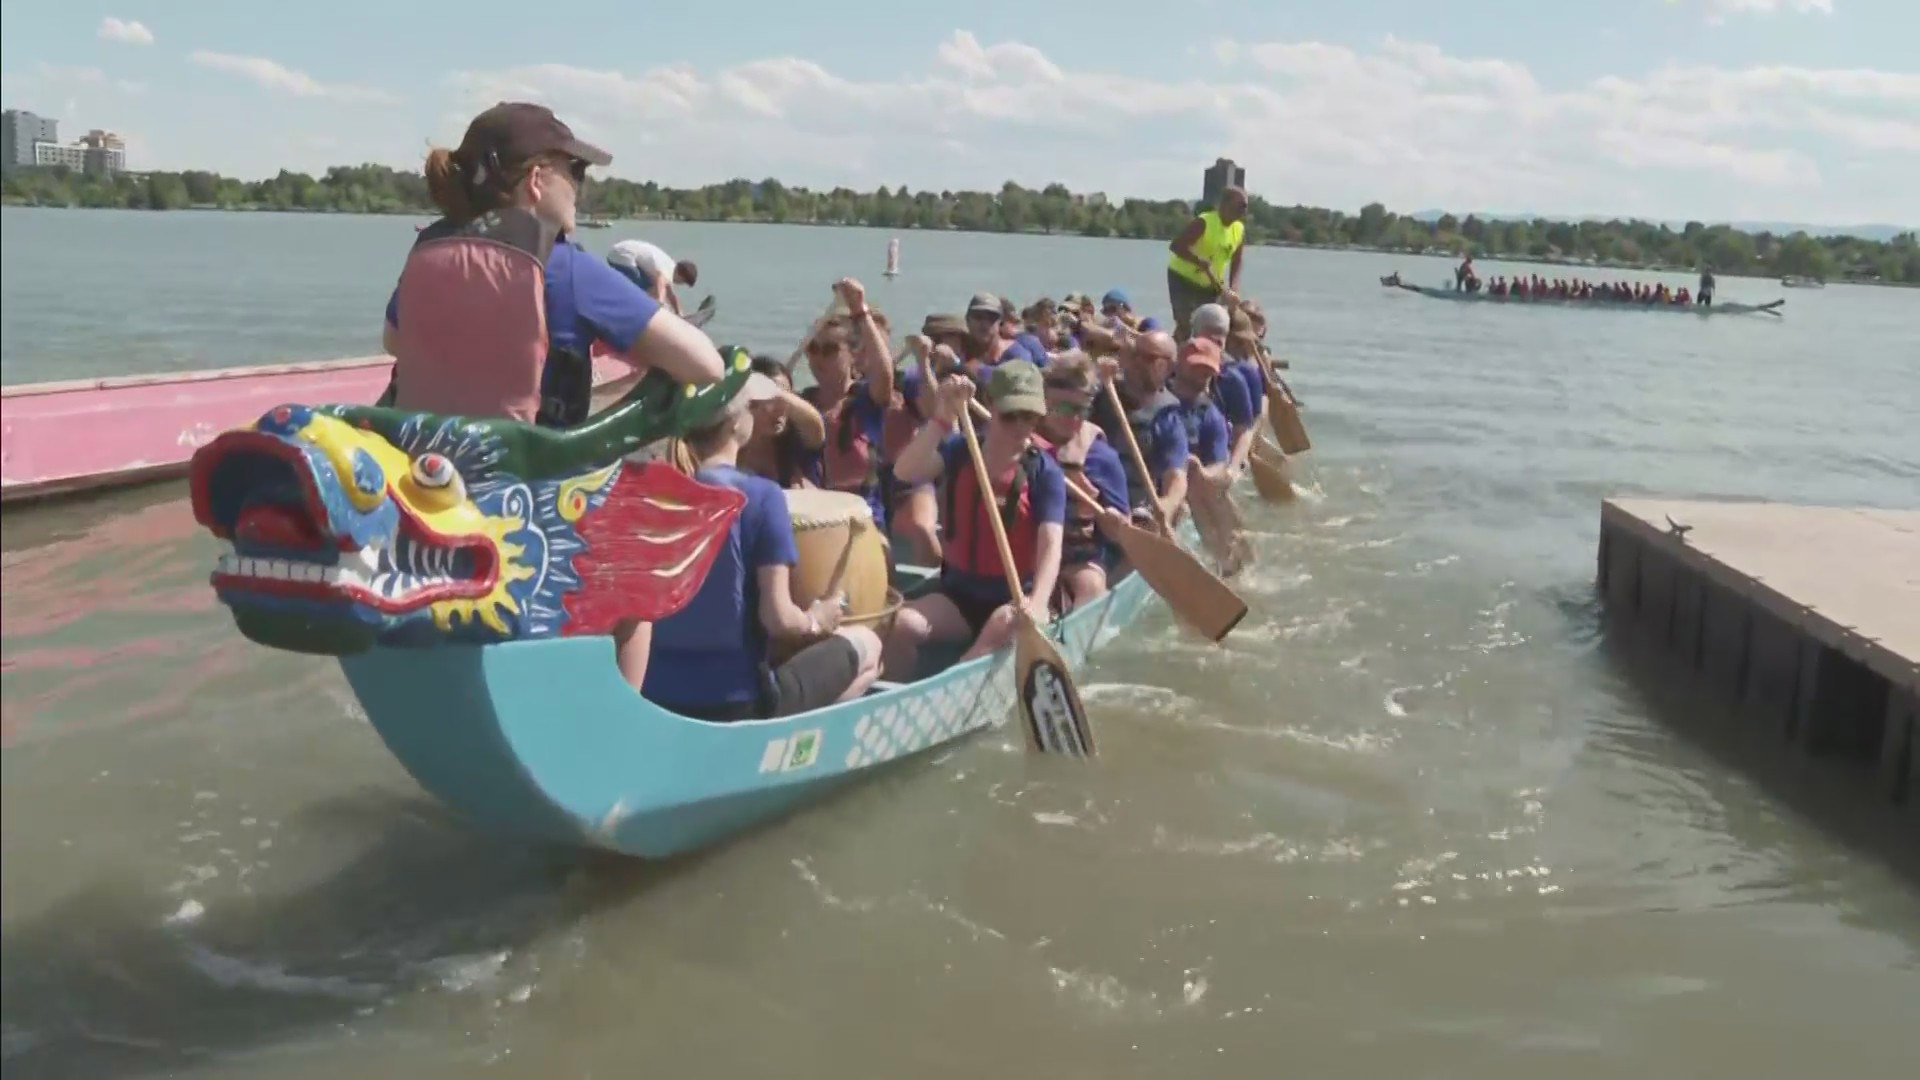 Colorado Dragon Boat Festival set to take place